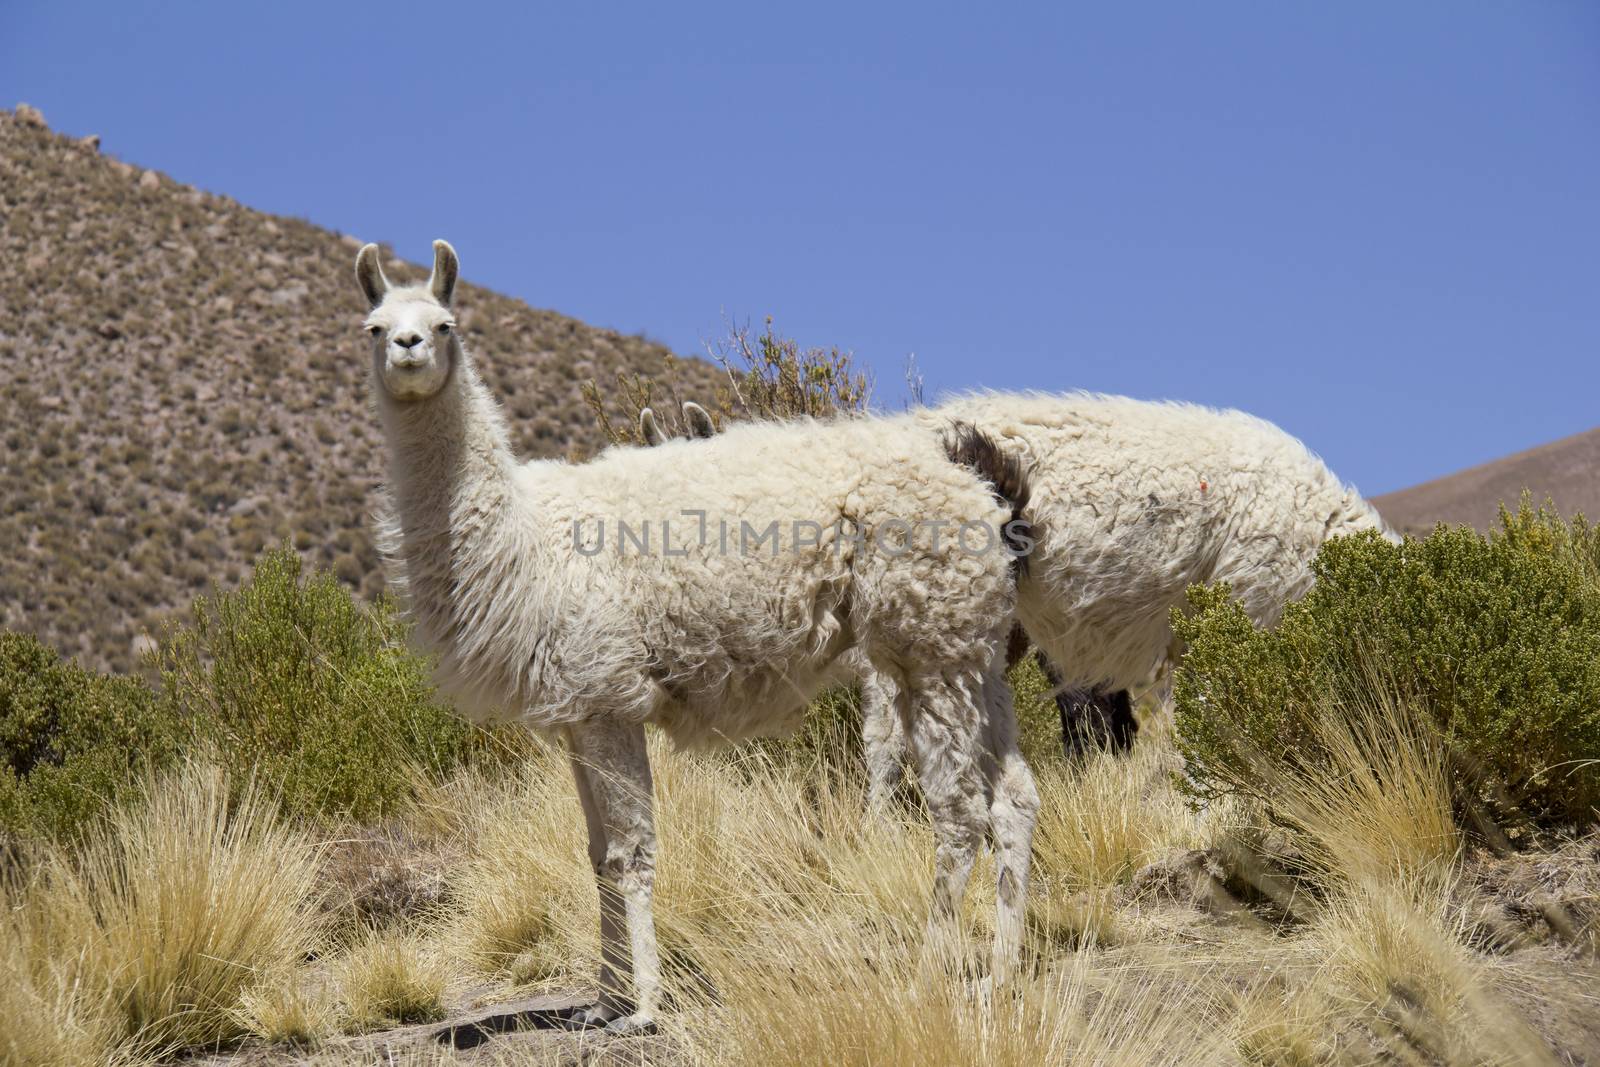 Lama shot in Bolivia